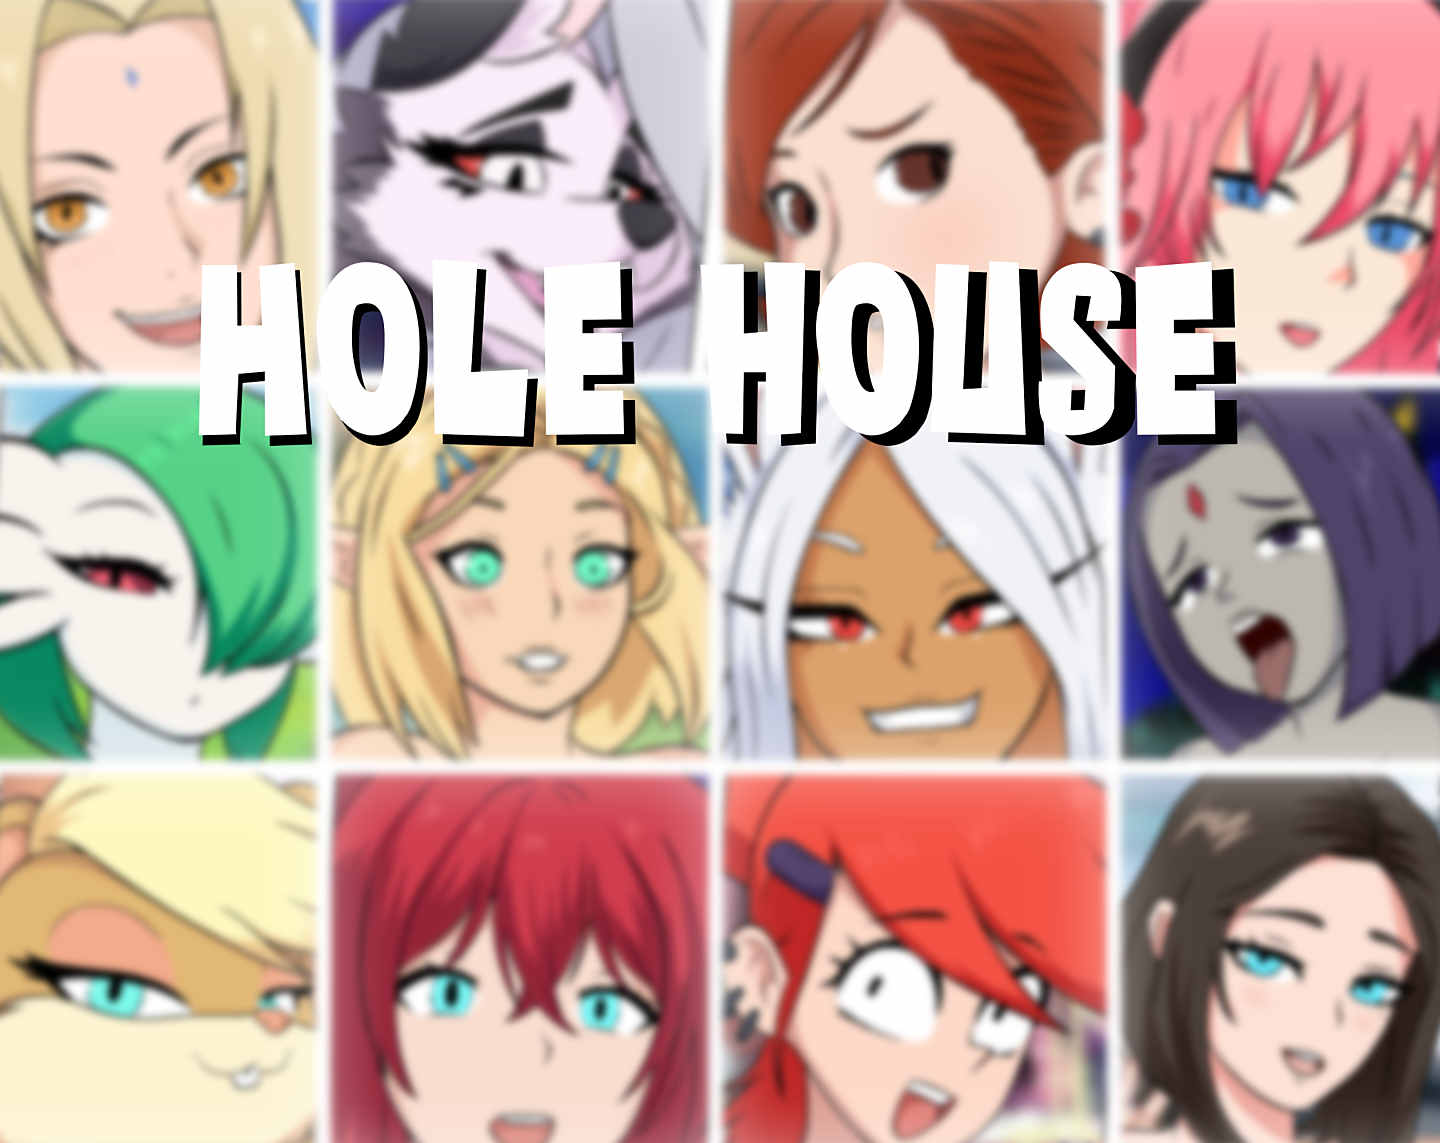 HoleHouse